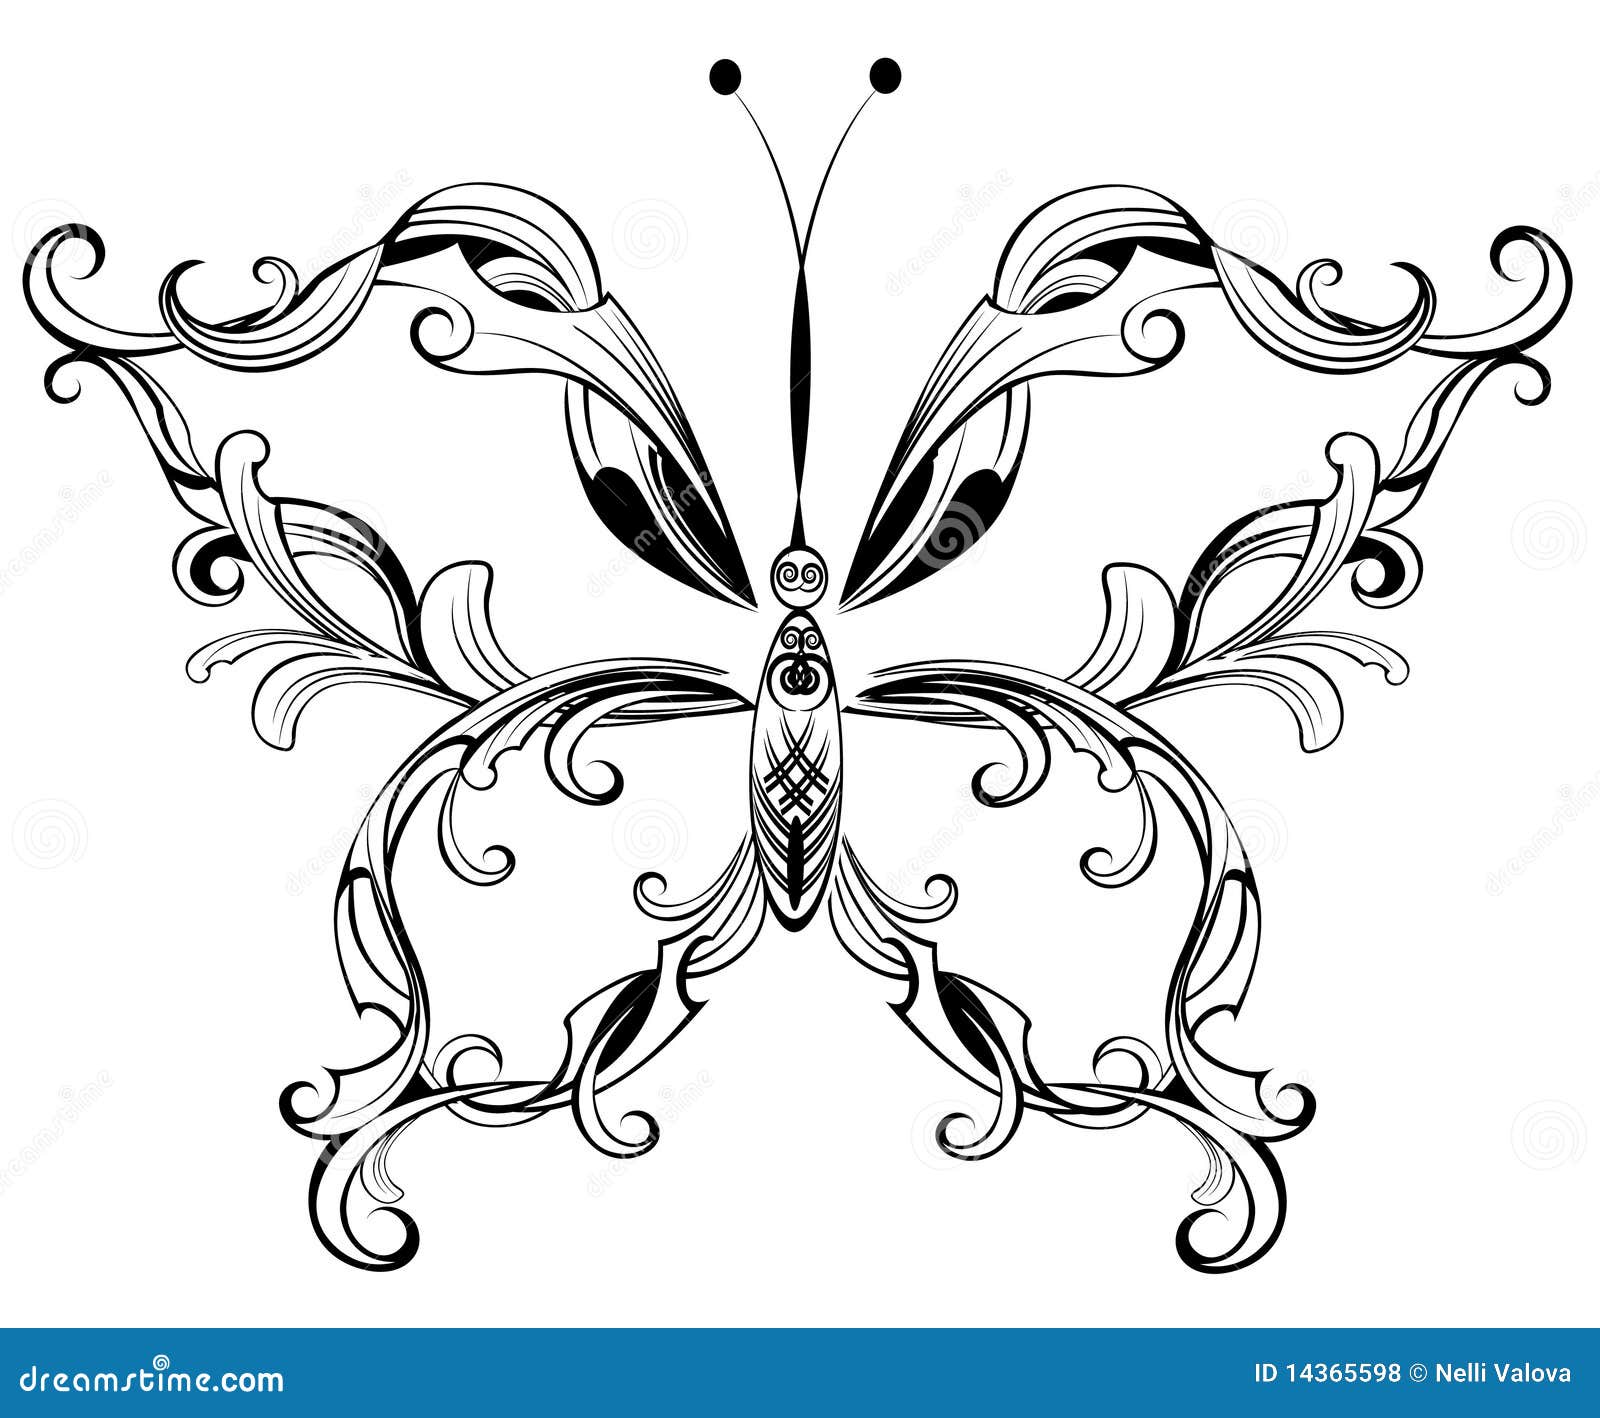 patterned butterfly